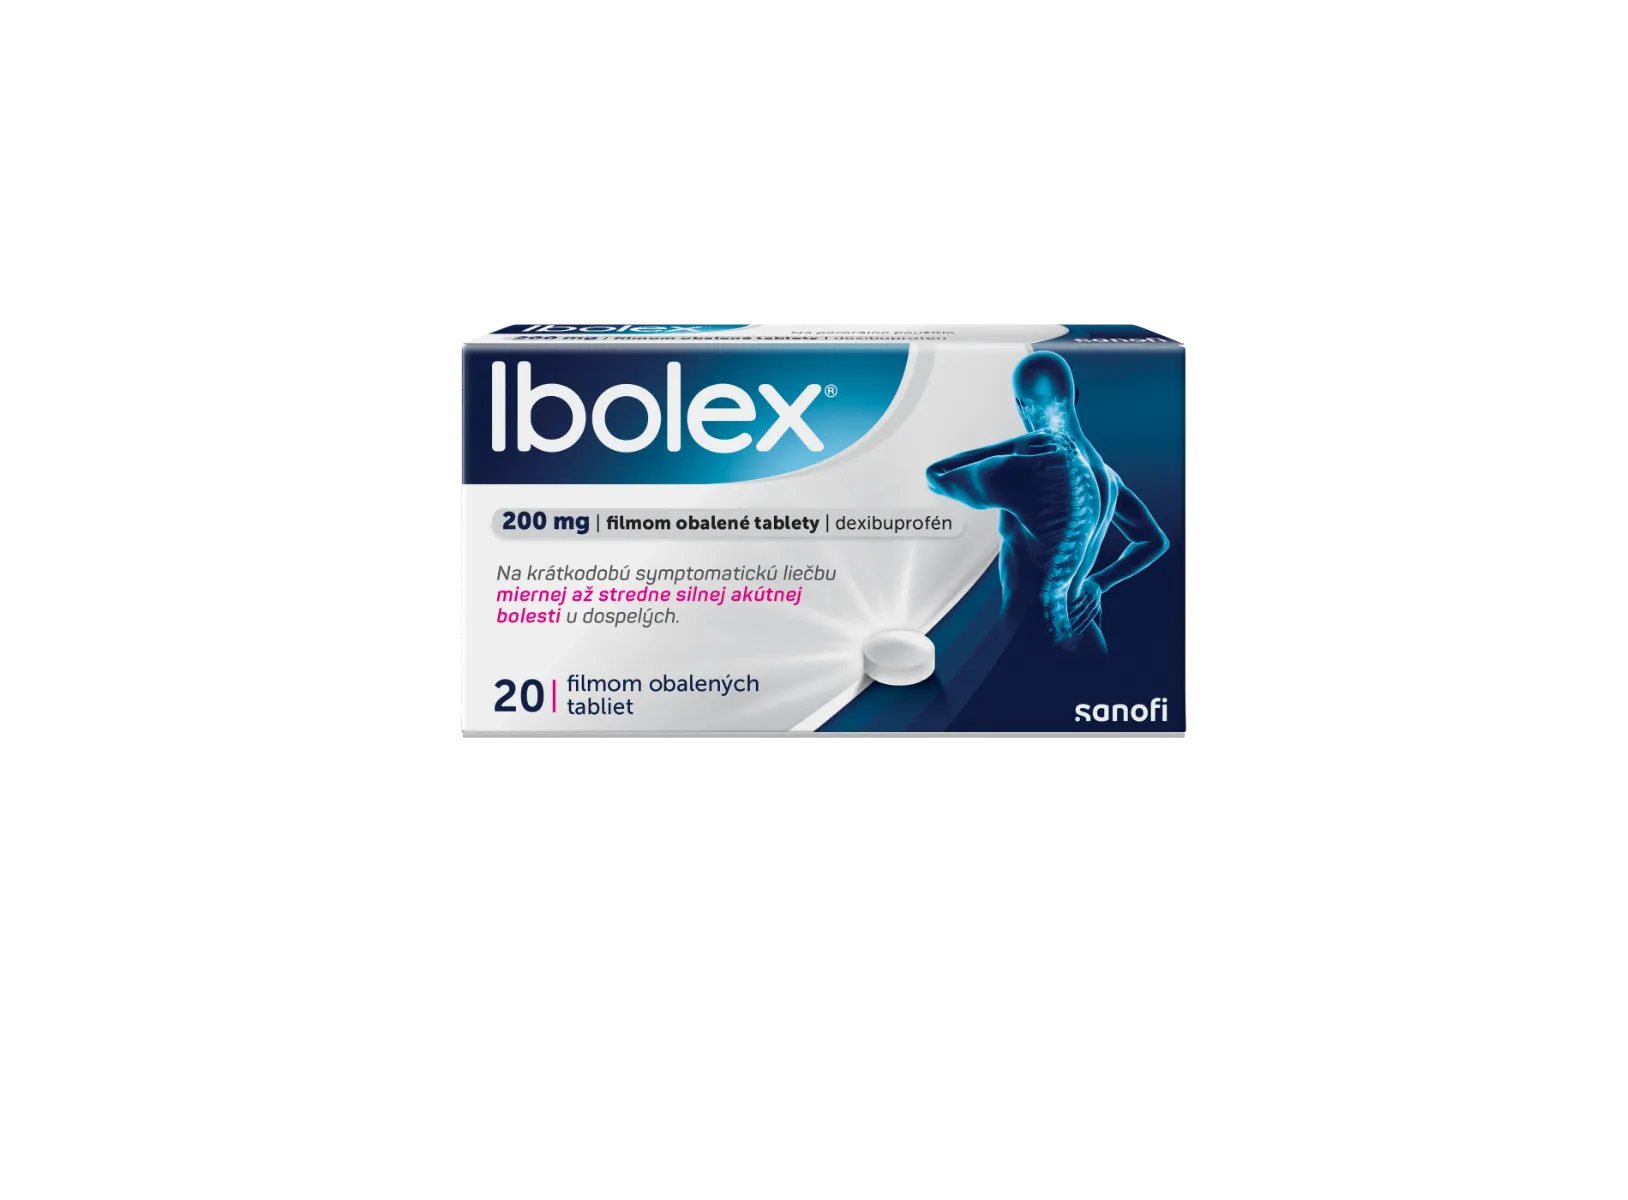 Ibolex 200 mg 20 tabliet 1×20 tbl, liek